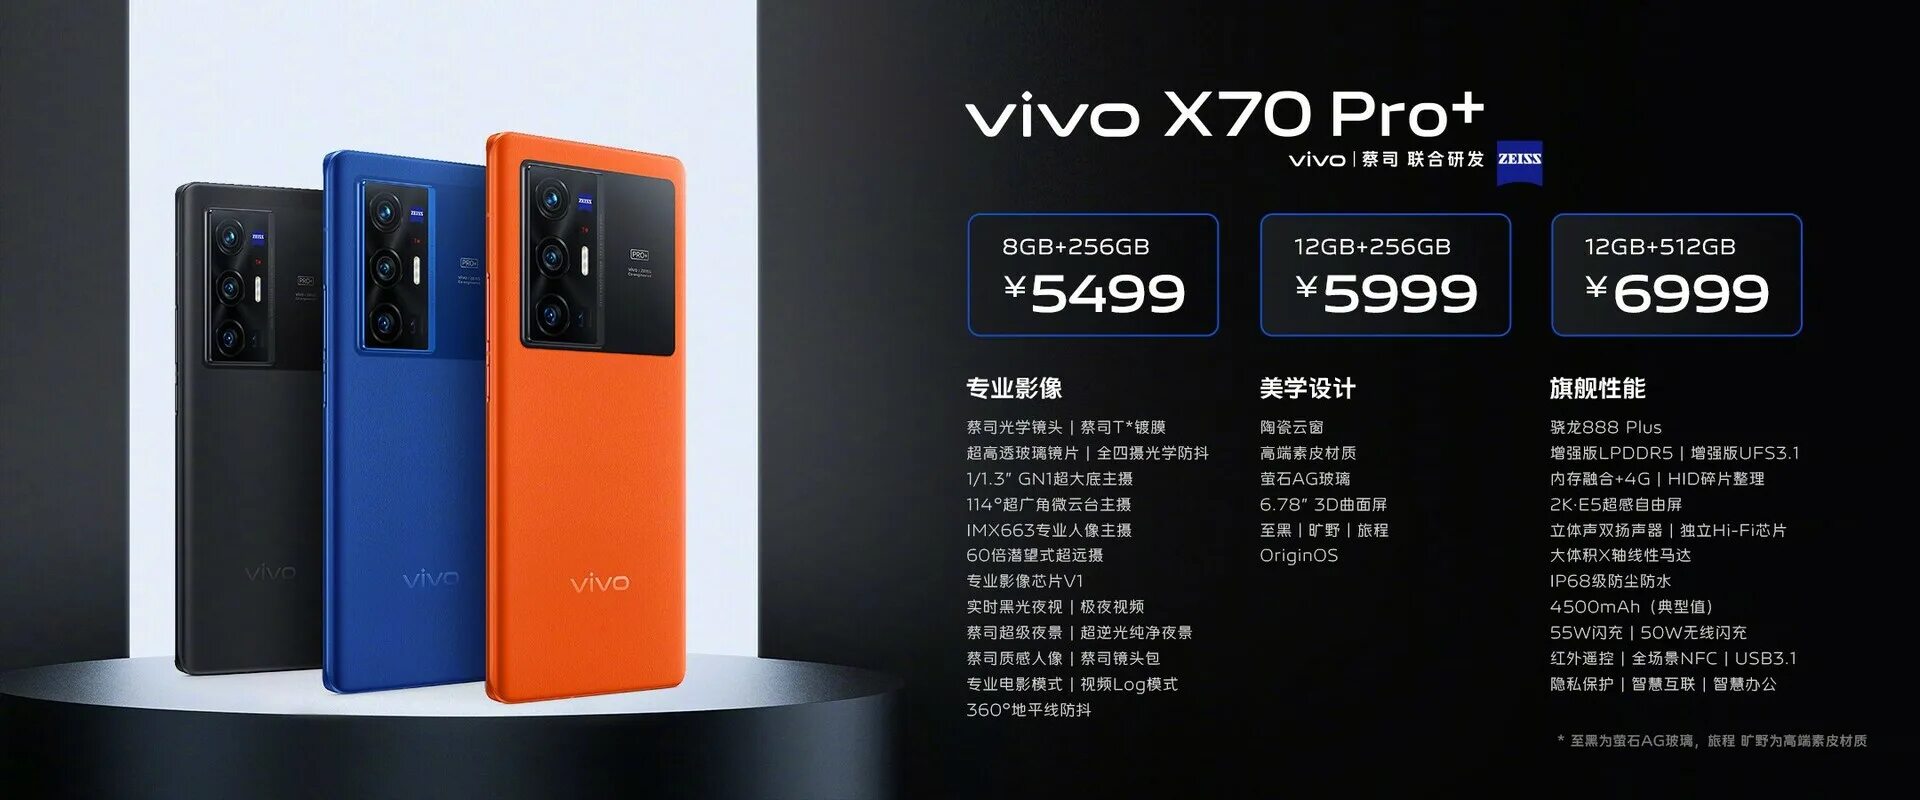 X70pro+. X70 Pro Plus. Vivo x70 Pro Plus характеристики. X70 Pro. Vivo x pro plus